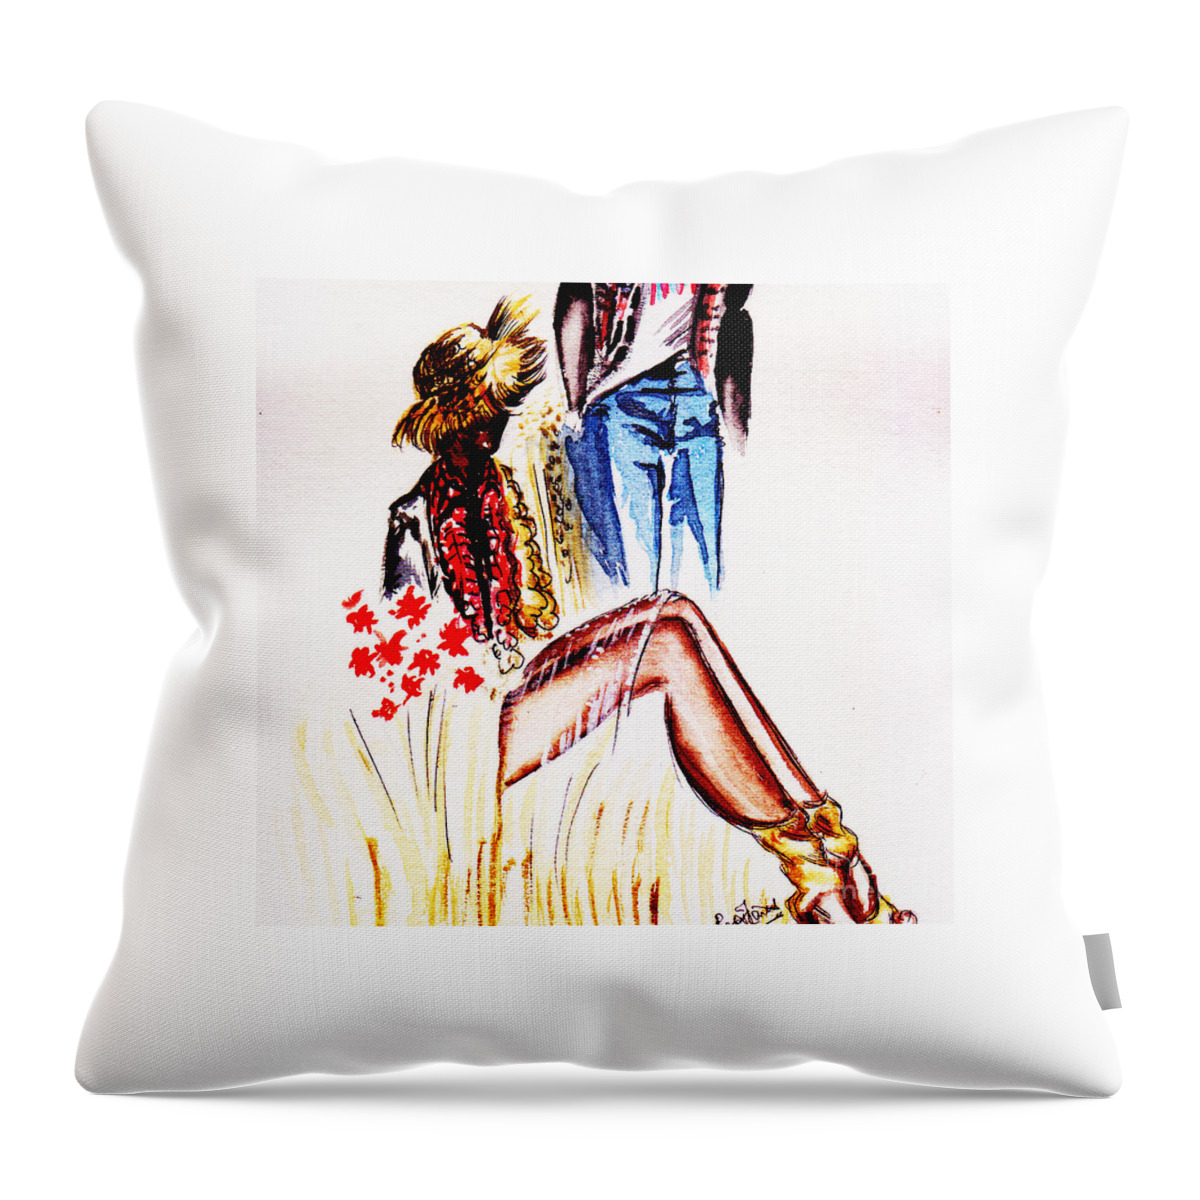 Fashion Illustration Painting Throw Pillow featuring the painting Fashion illustration by Remy Francis